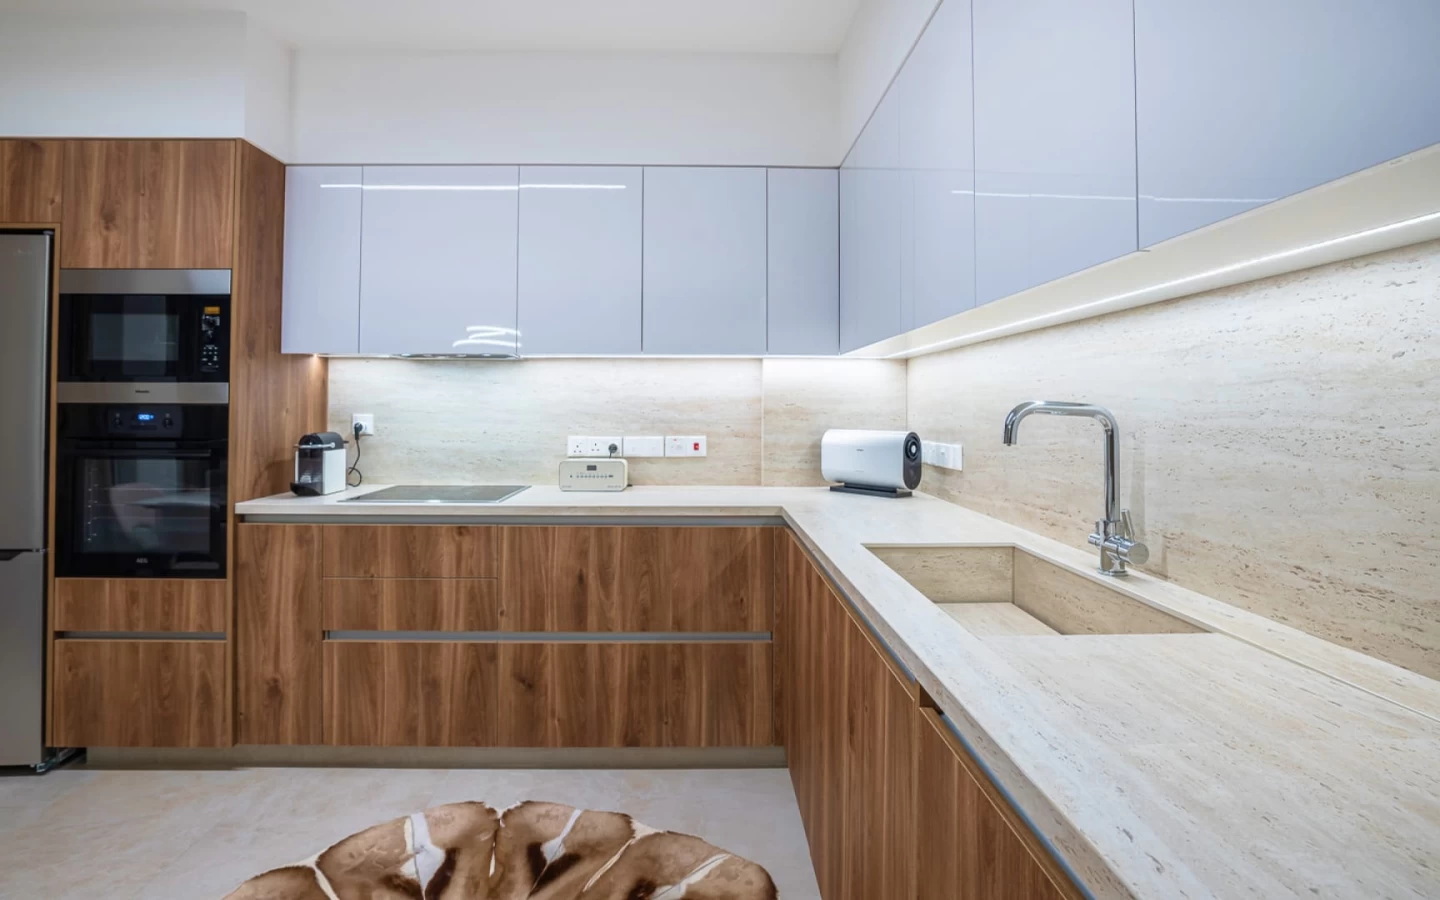 Kitchen worktop in travertine-effect porcelain stoneware by Atlas Plan